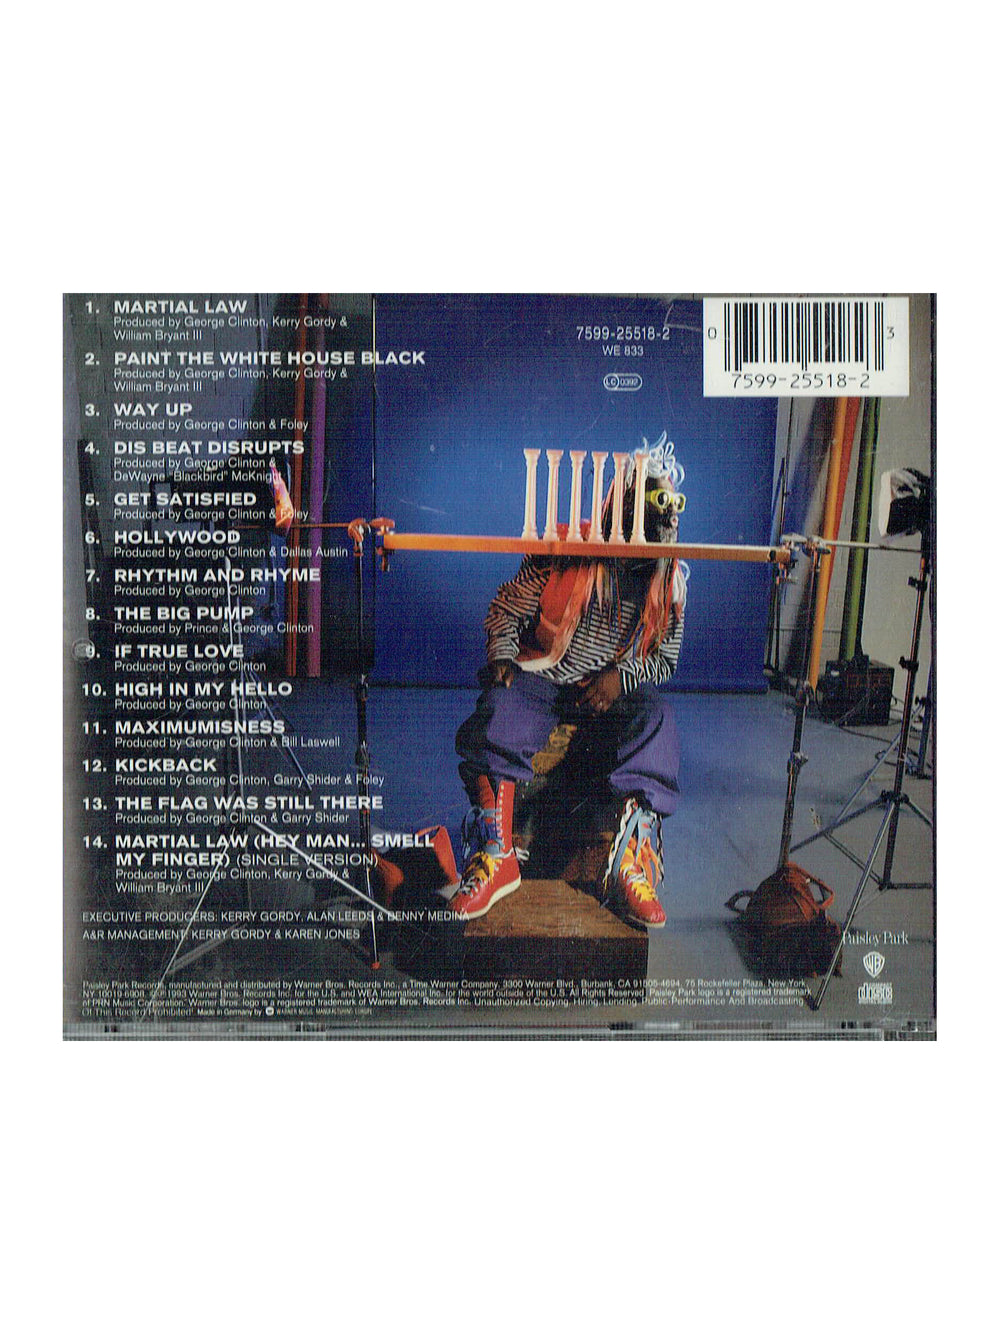 Prince – George Clinton Hey Man Smell My Finger CD Album Paisley Park 1993 Prince